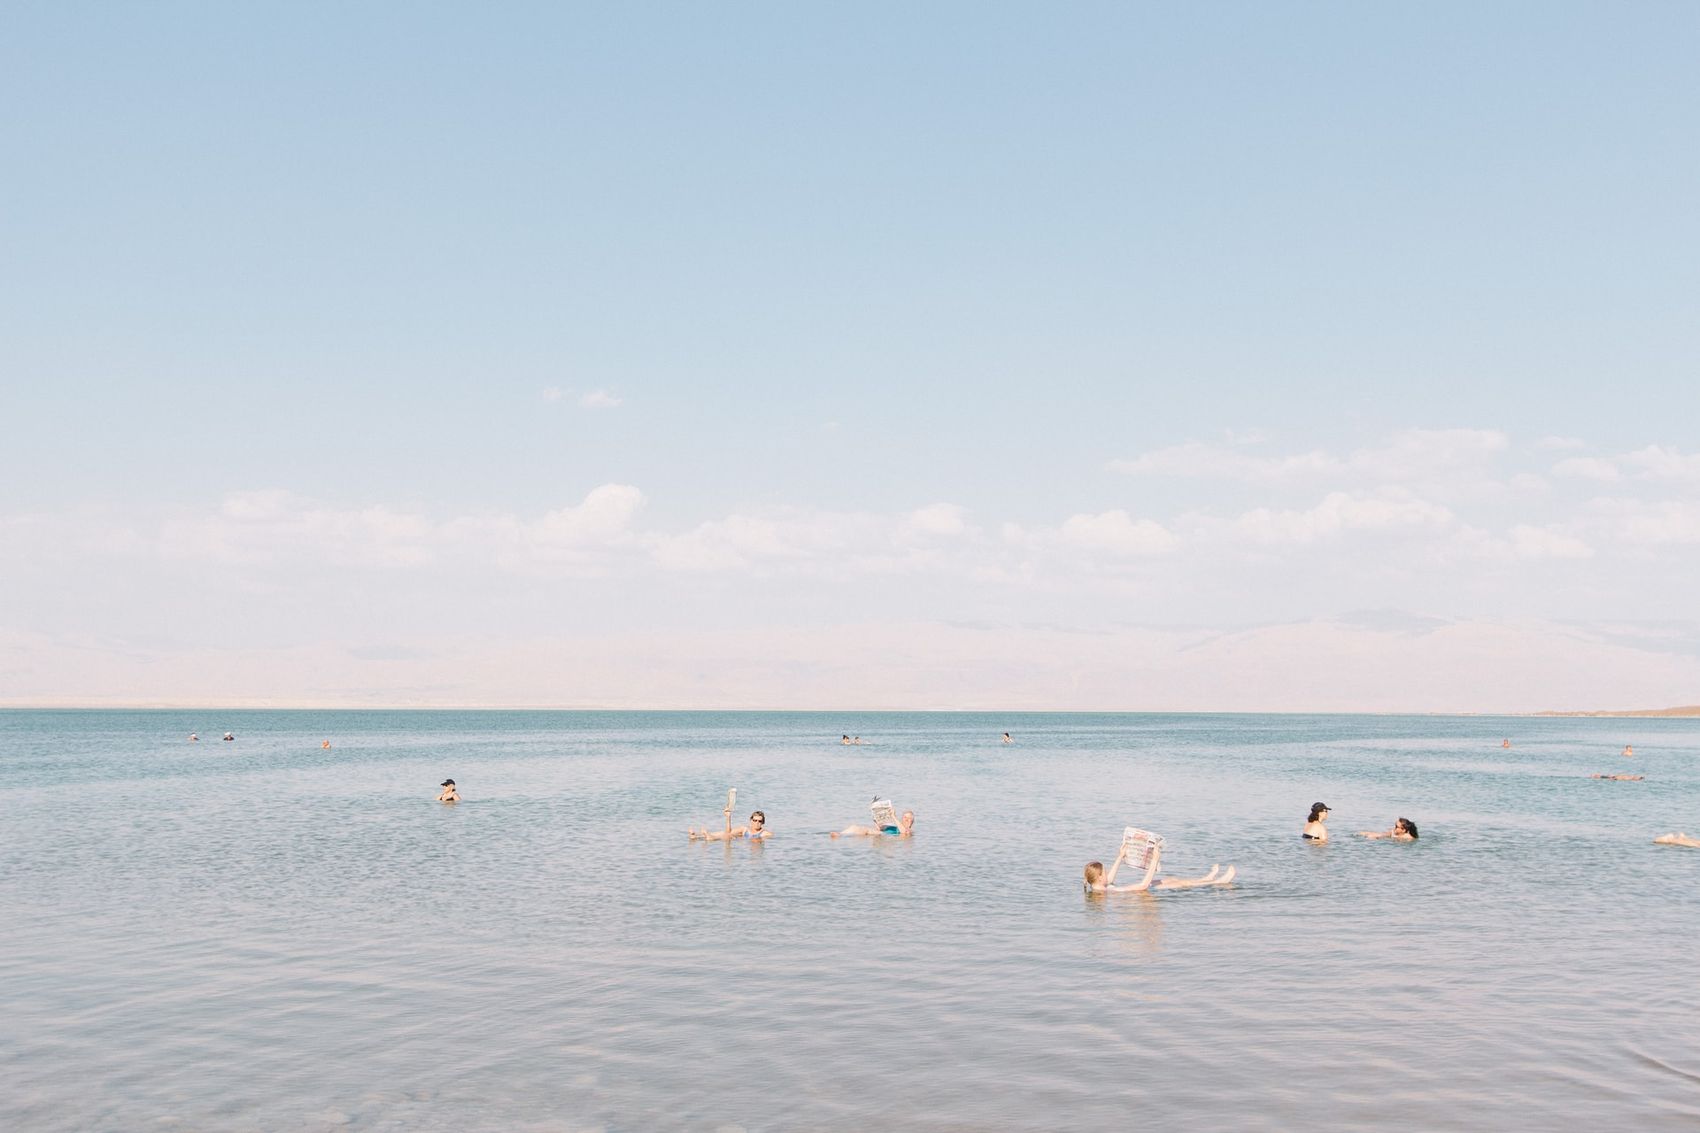 People in the Dead Sea in Israel